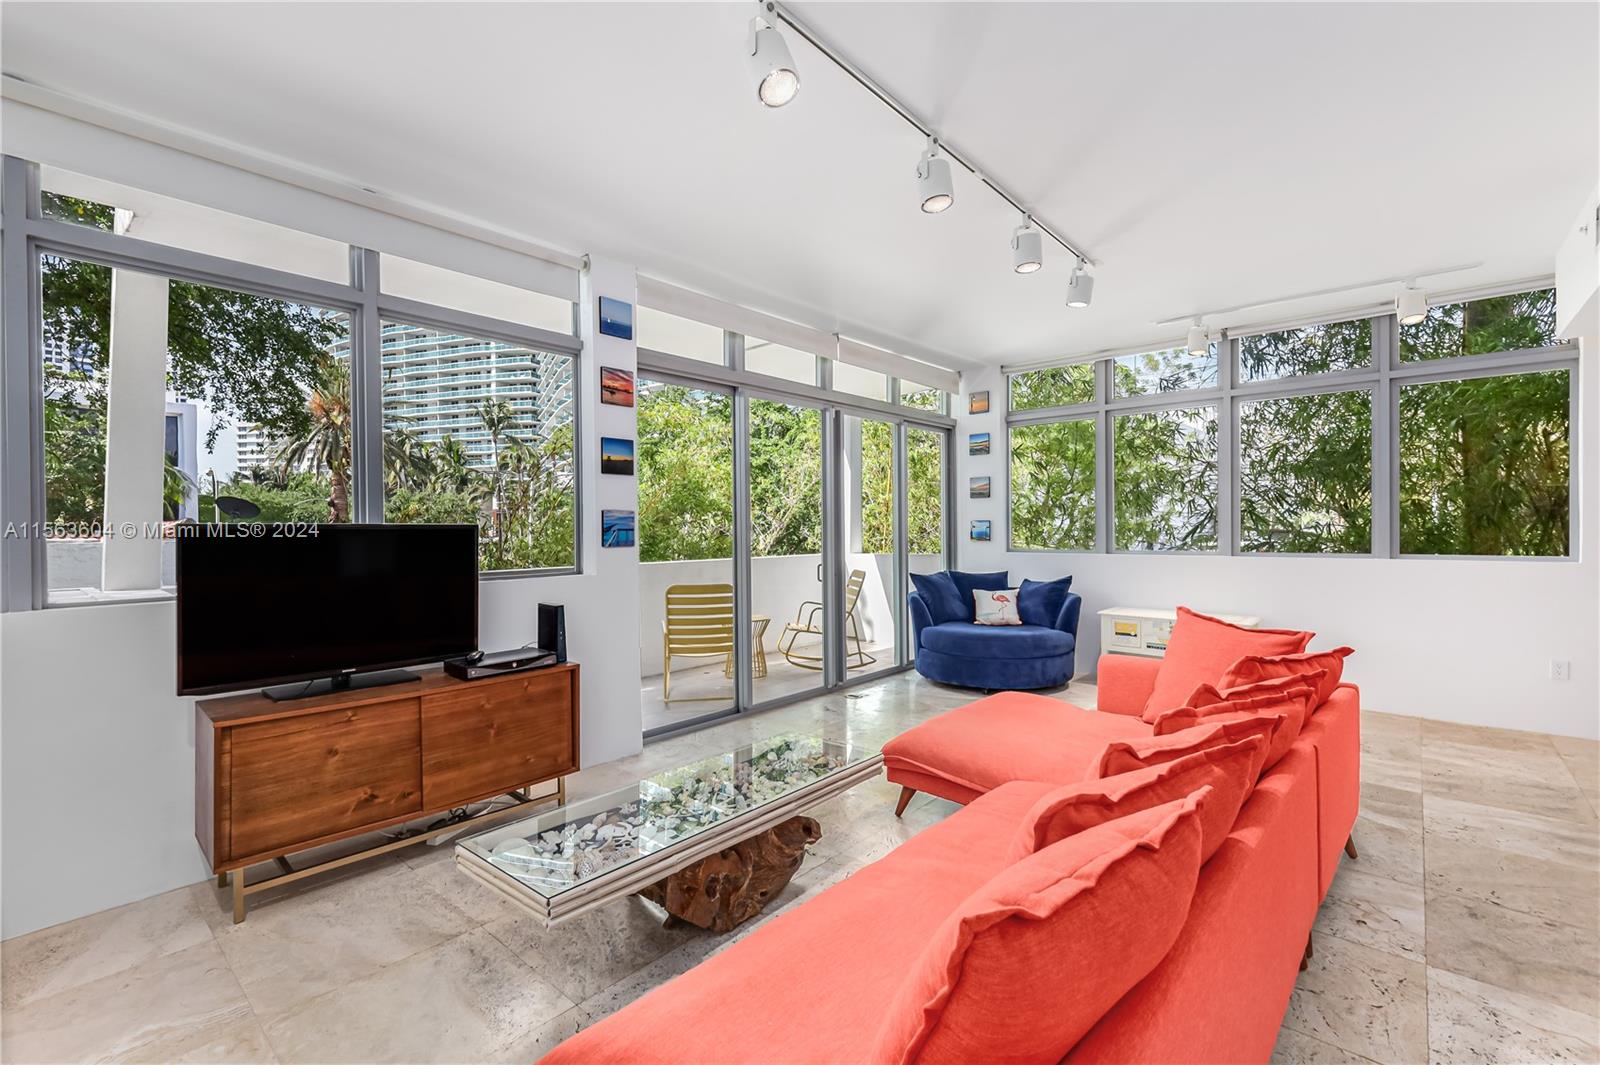 Property for Sale at 1577 Bay Rd 205, Miami Beach, Miami-Dade County, Florida - Bedrooms: 2 
Bathrooms: 3  - $1,095,000